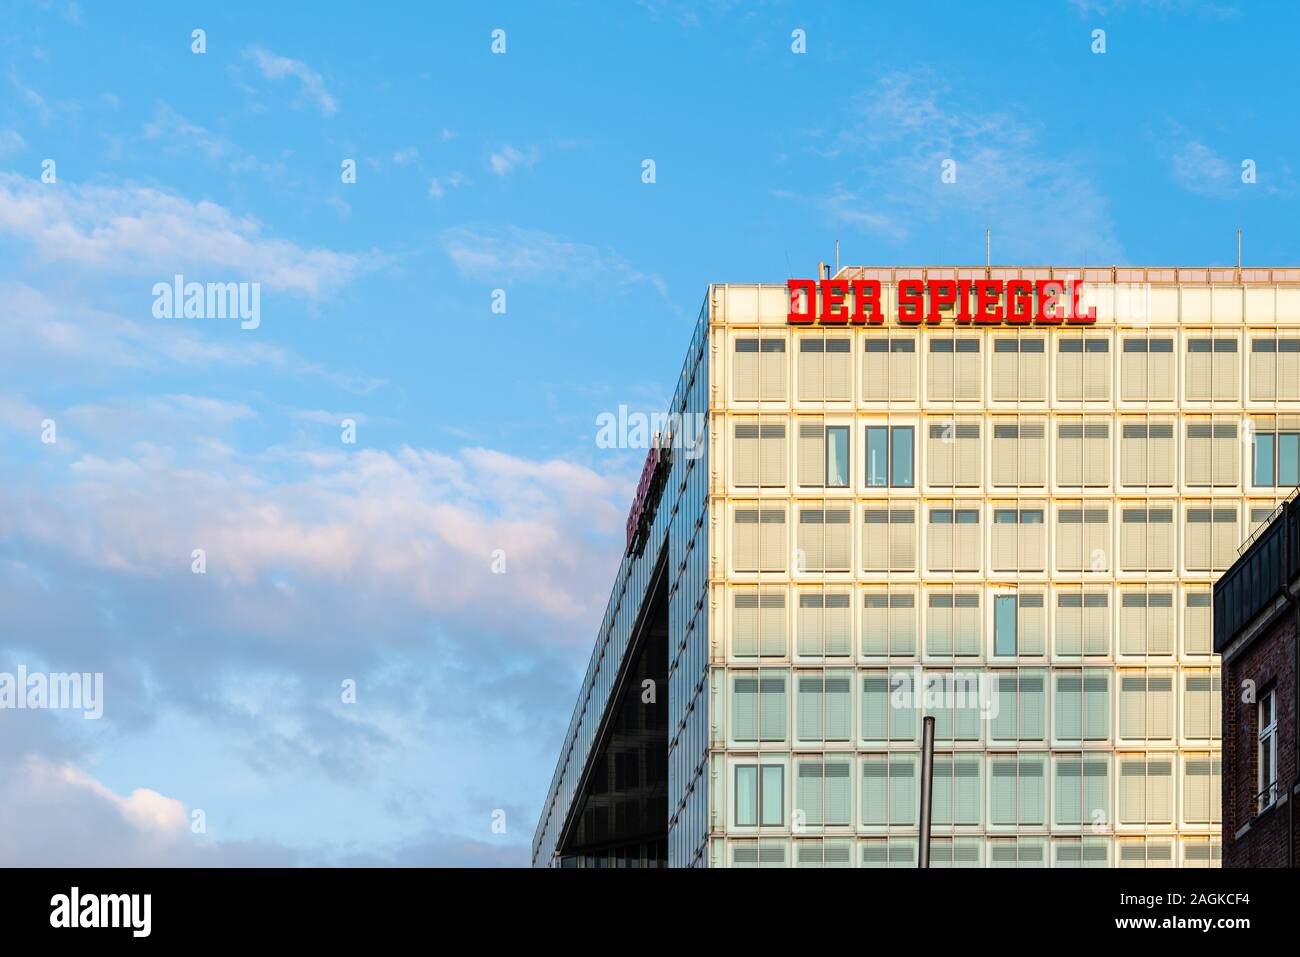 Hamburg, Germany - August 3, 2019: Der Spiegel banner on headquarter of the company in Hamburg. It is a German weekly news magazine Stock Photo